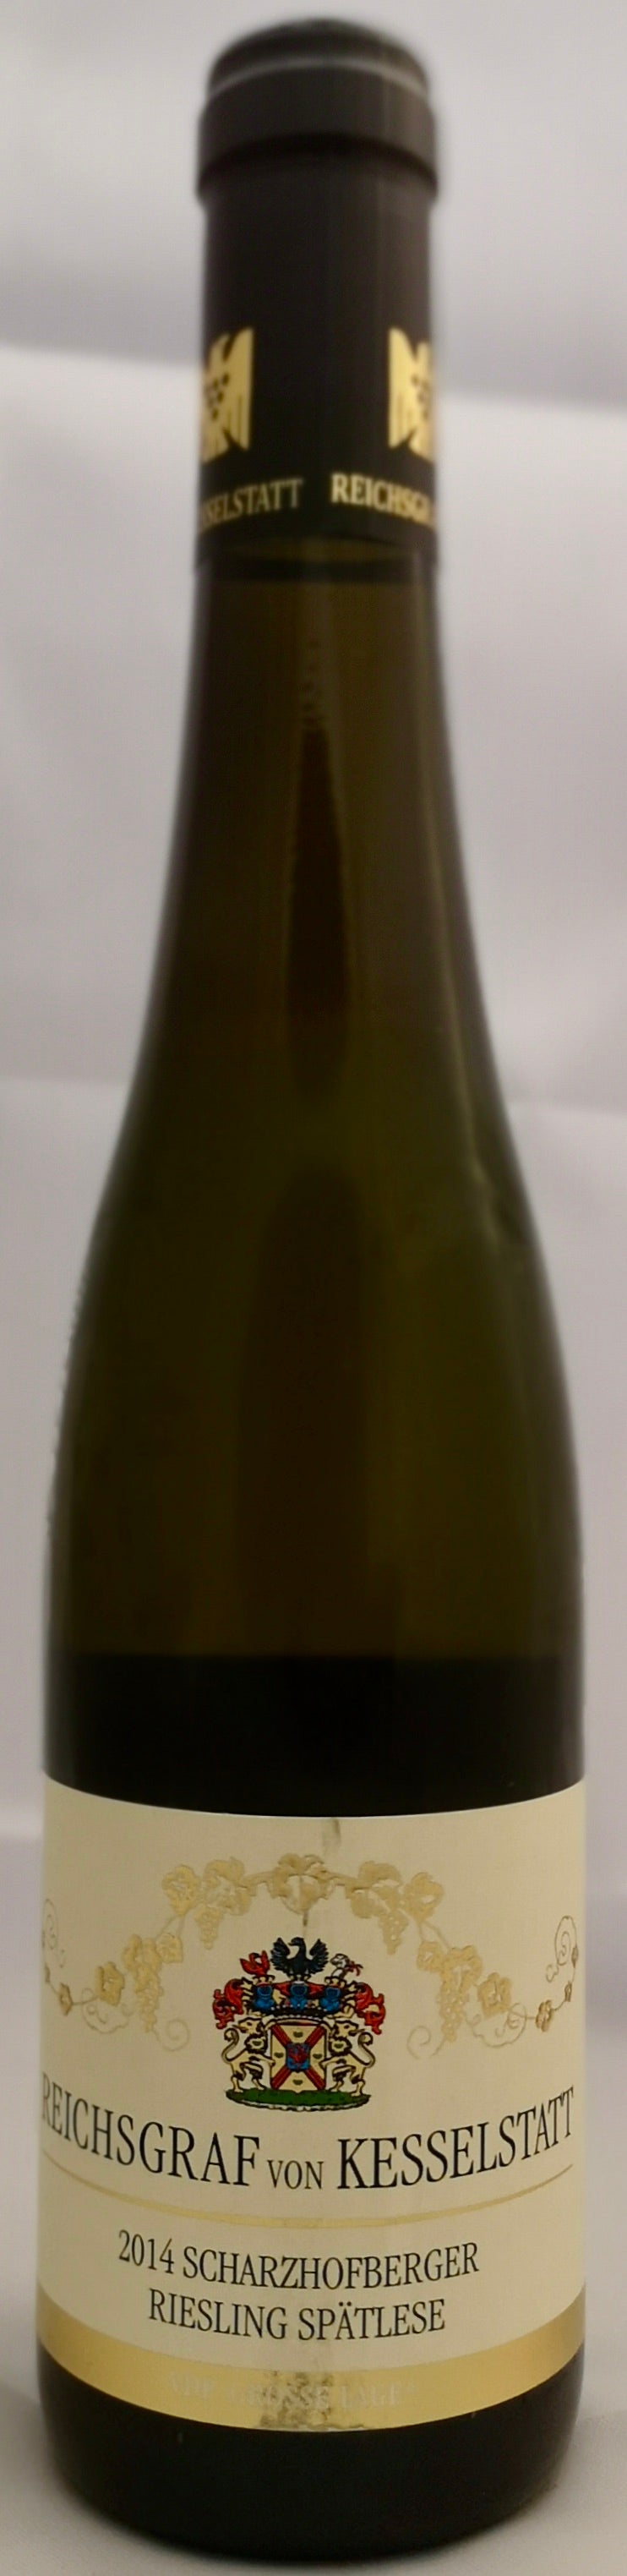 Kesselstatt Scharzhofberger Riesling Spatlese 2014 (375ml) - iWine.sg